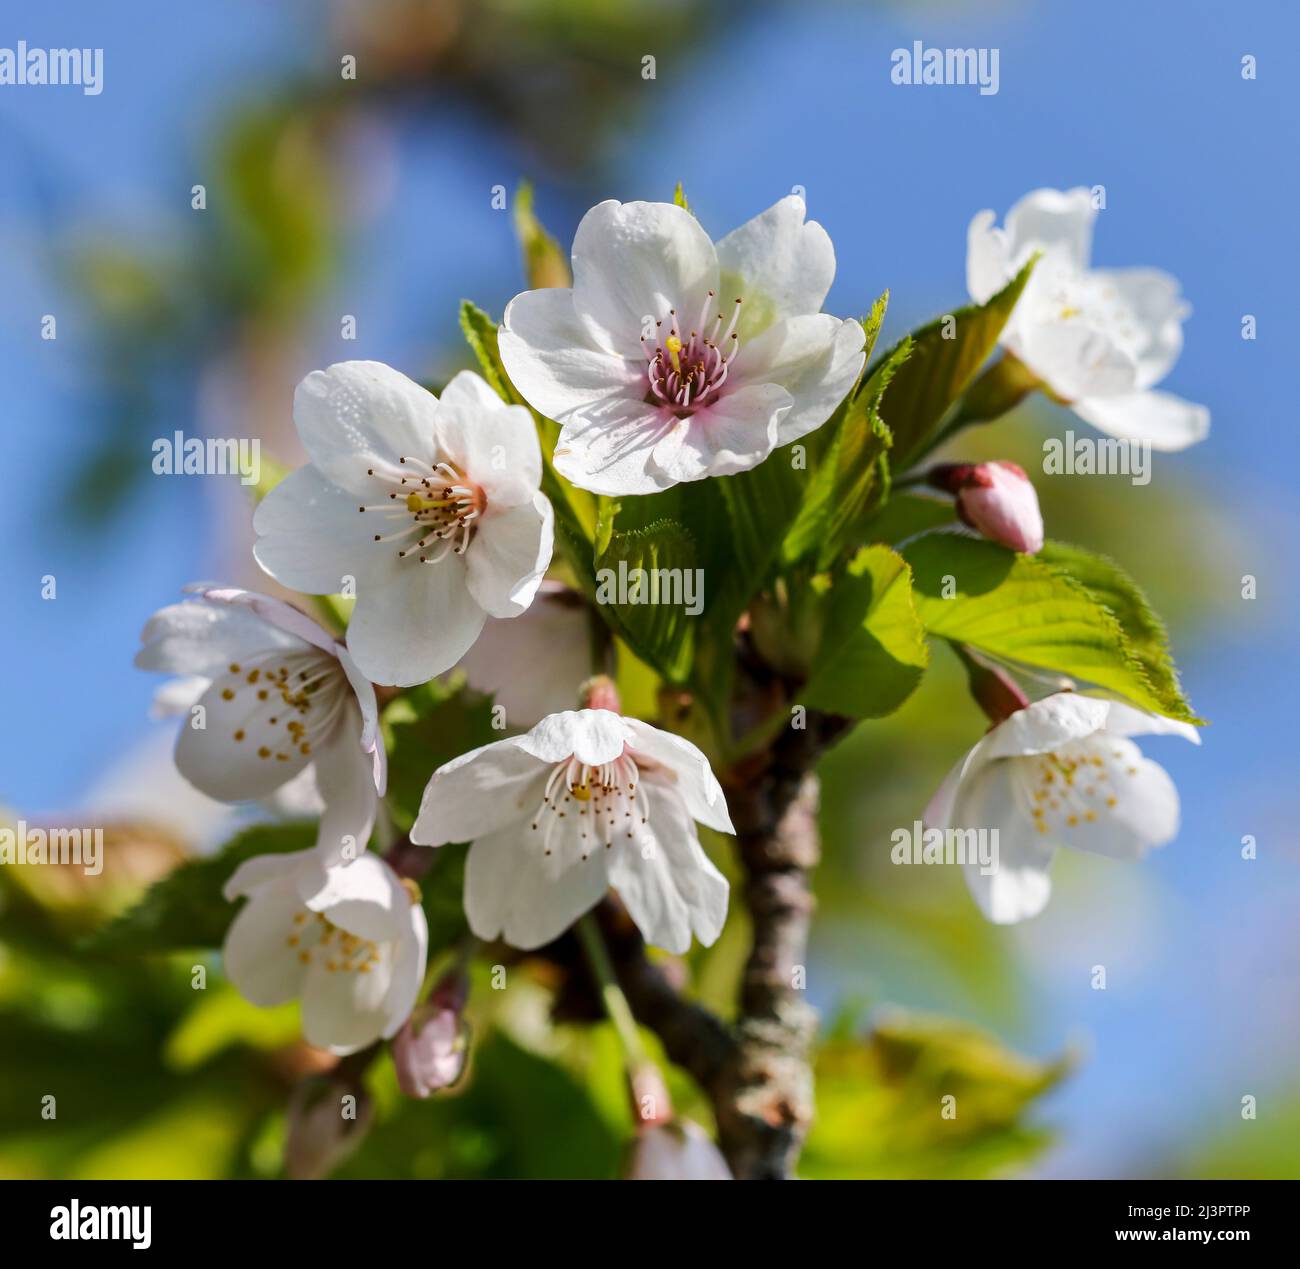 Spring blossoms of 'Spreading Plum' tree (Prunus divaricata), pink white flowers blooming during Spring Sakaru season. Macro closeup. Dublin, Ireland Stock Photo